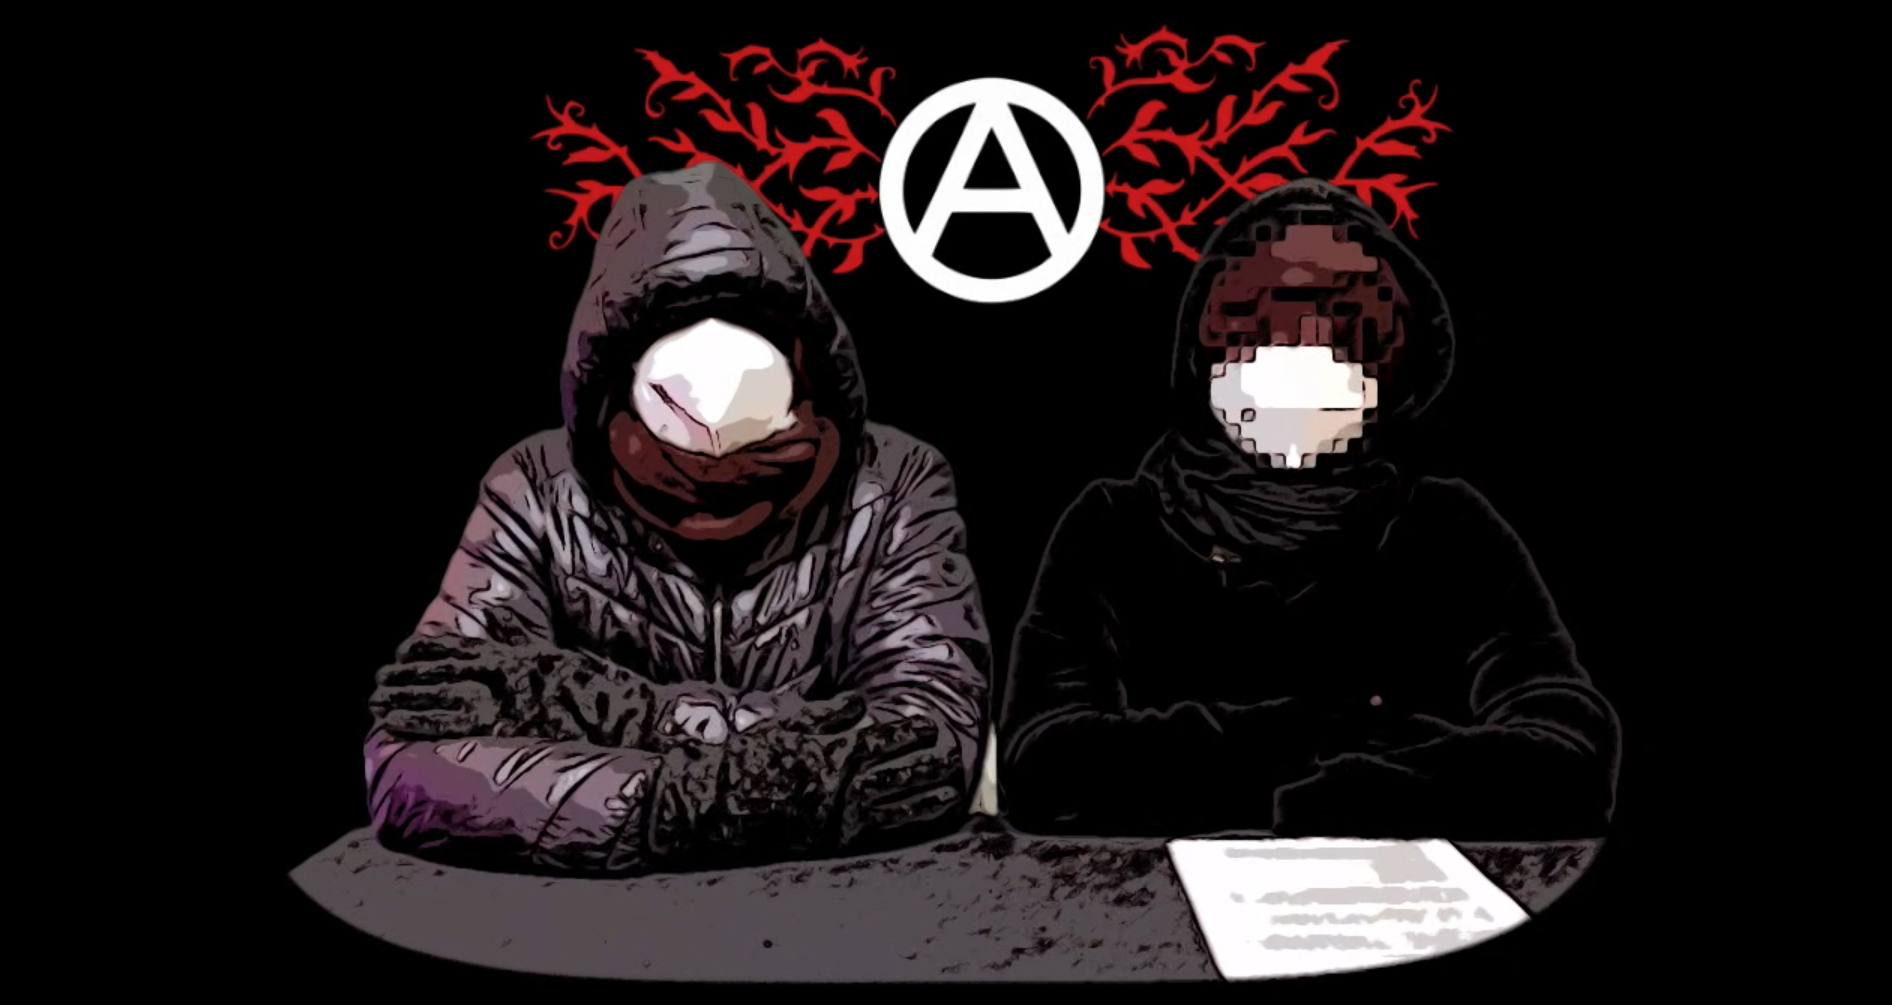 New year statement from anarchist collective Pramen from Belarus